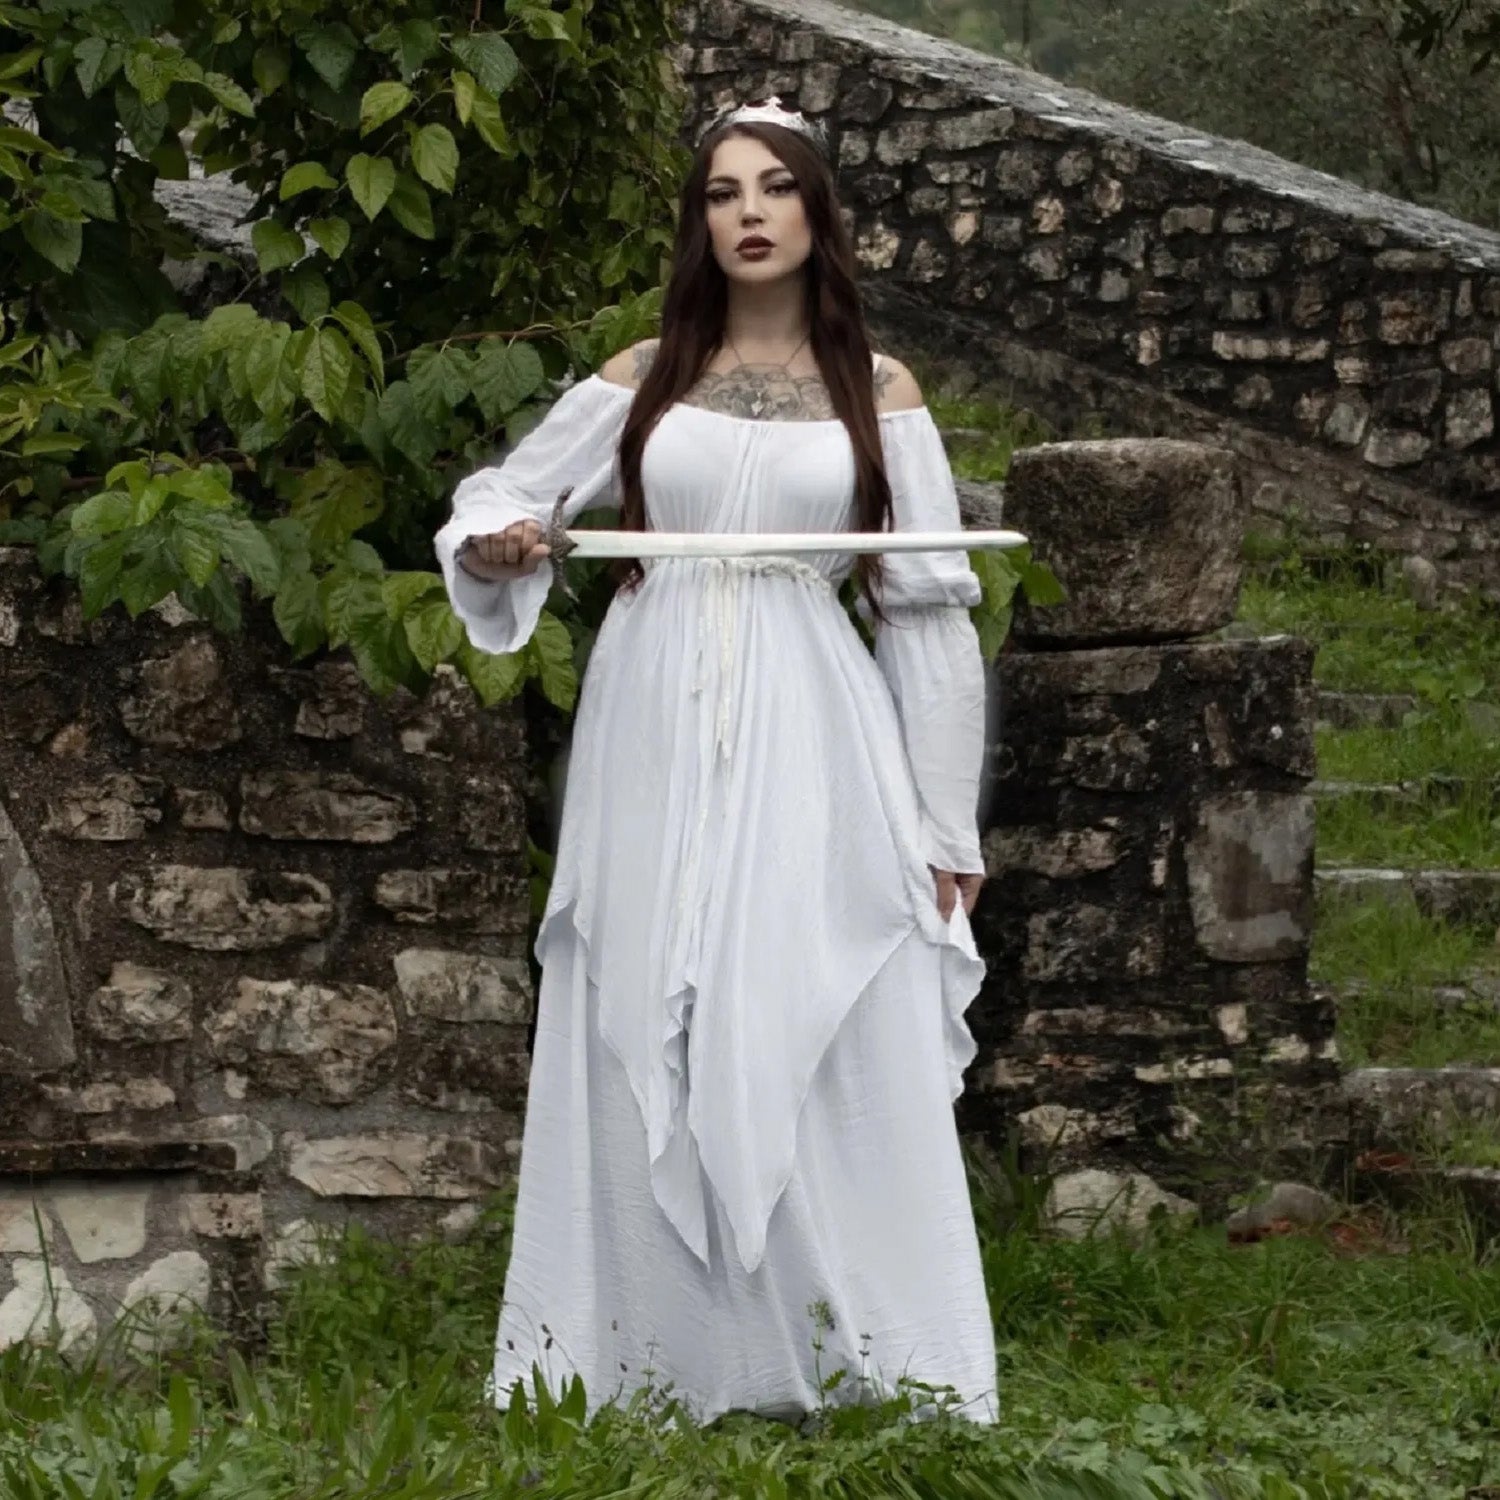 Kimber Long Sleeved Layered Renaissance Boho Dress - The Bohemian Closet